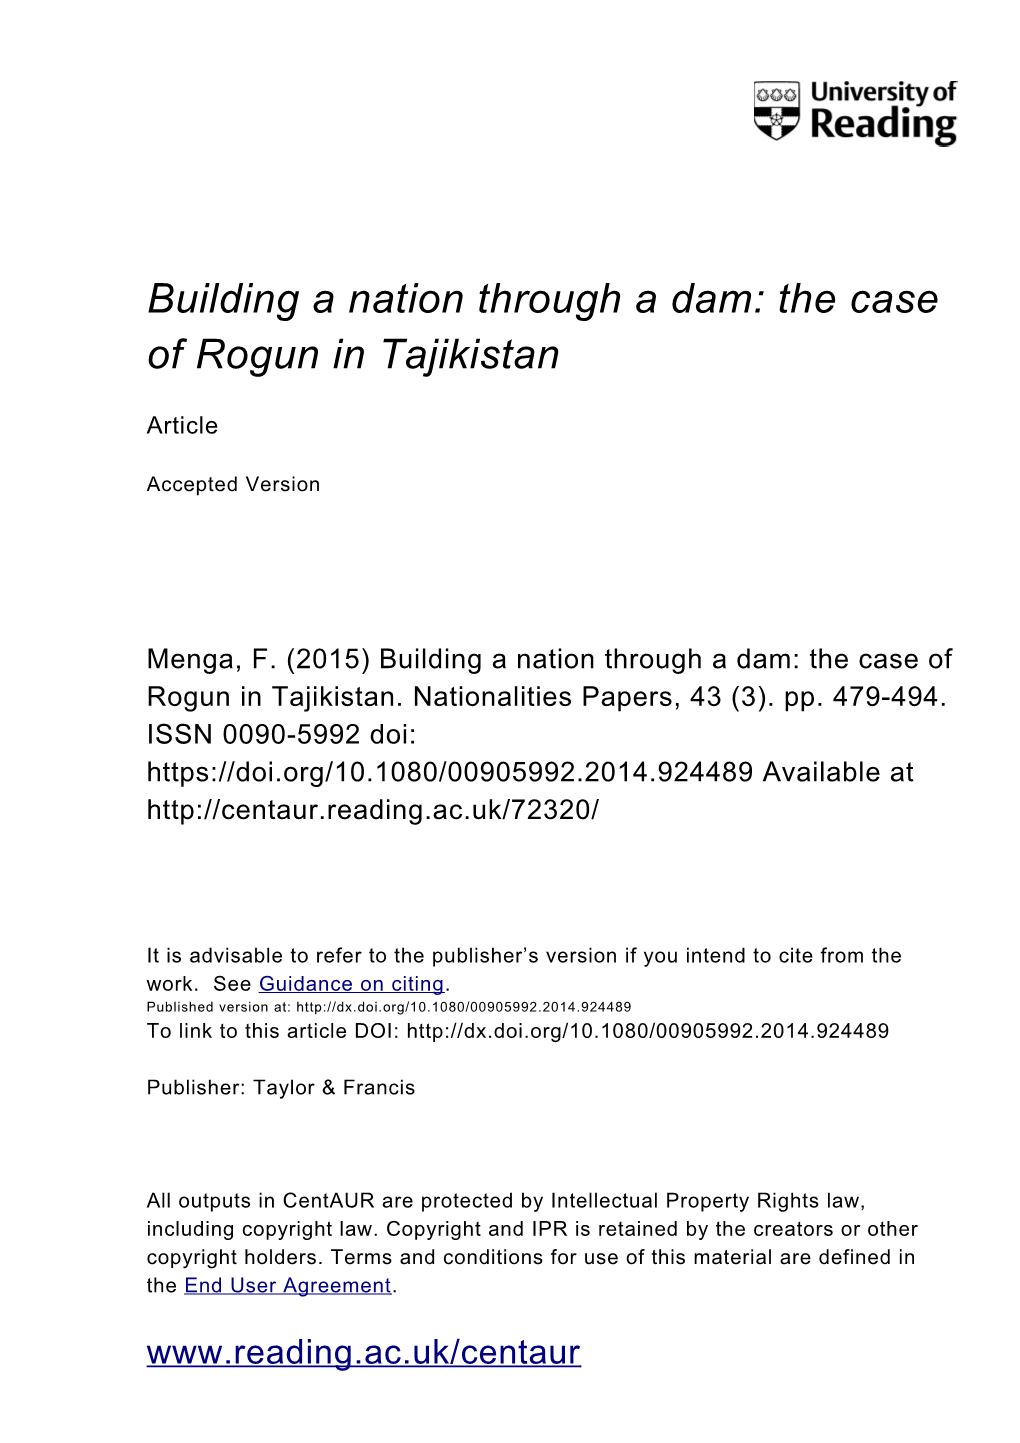 Building a Nation Through a Dam: the Case of Rogun in Tajikistan